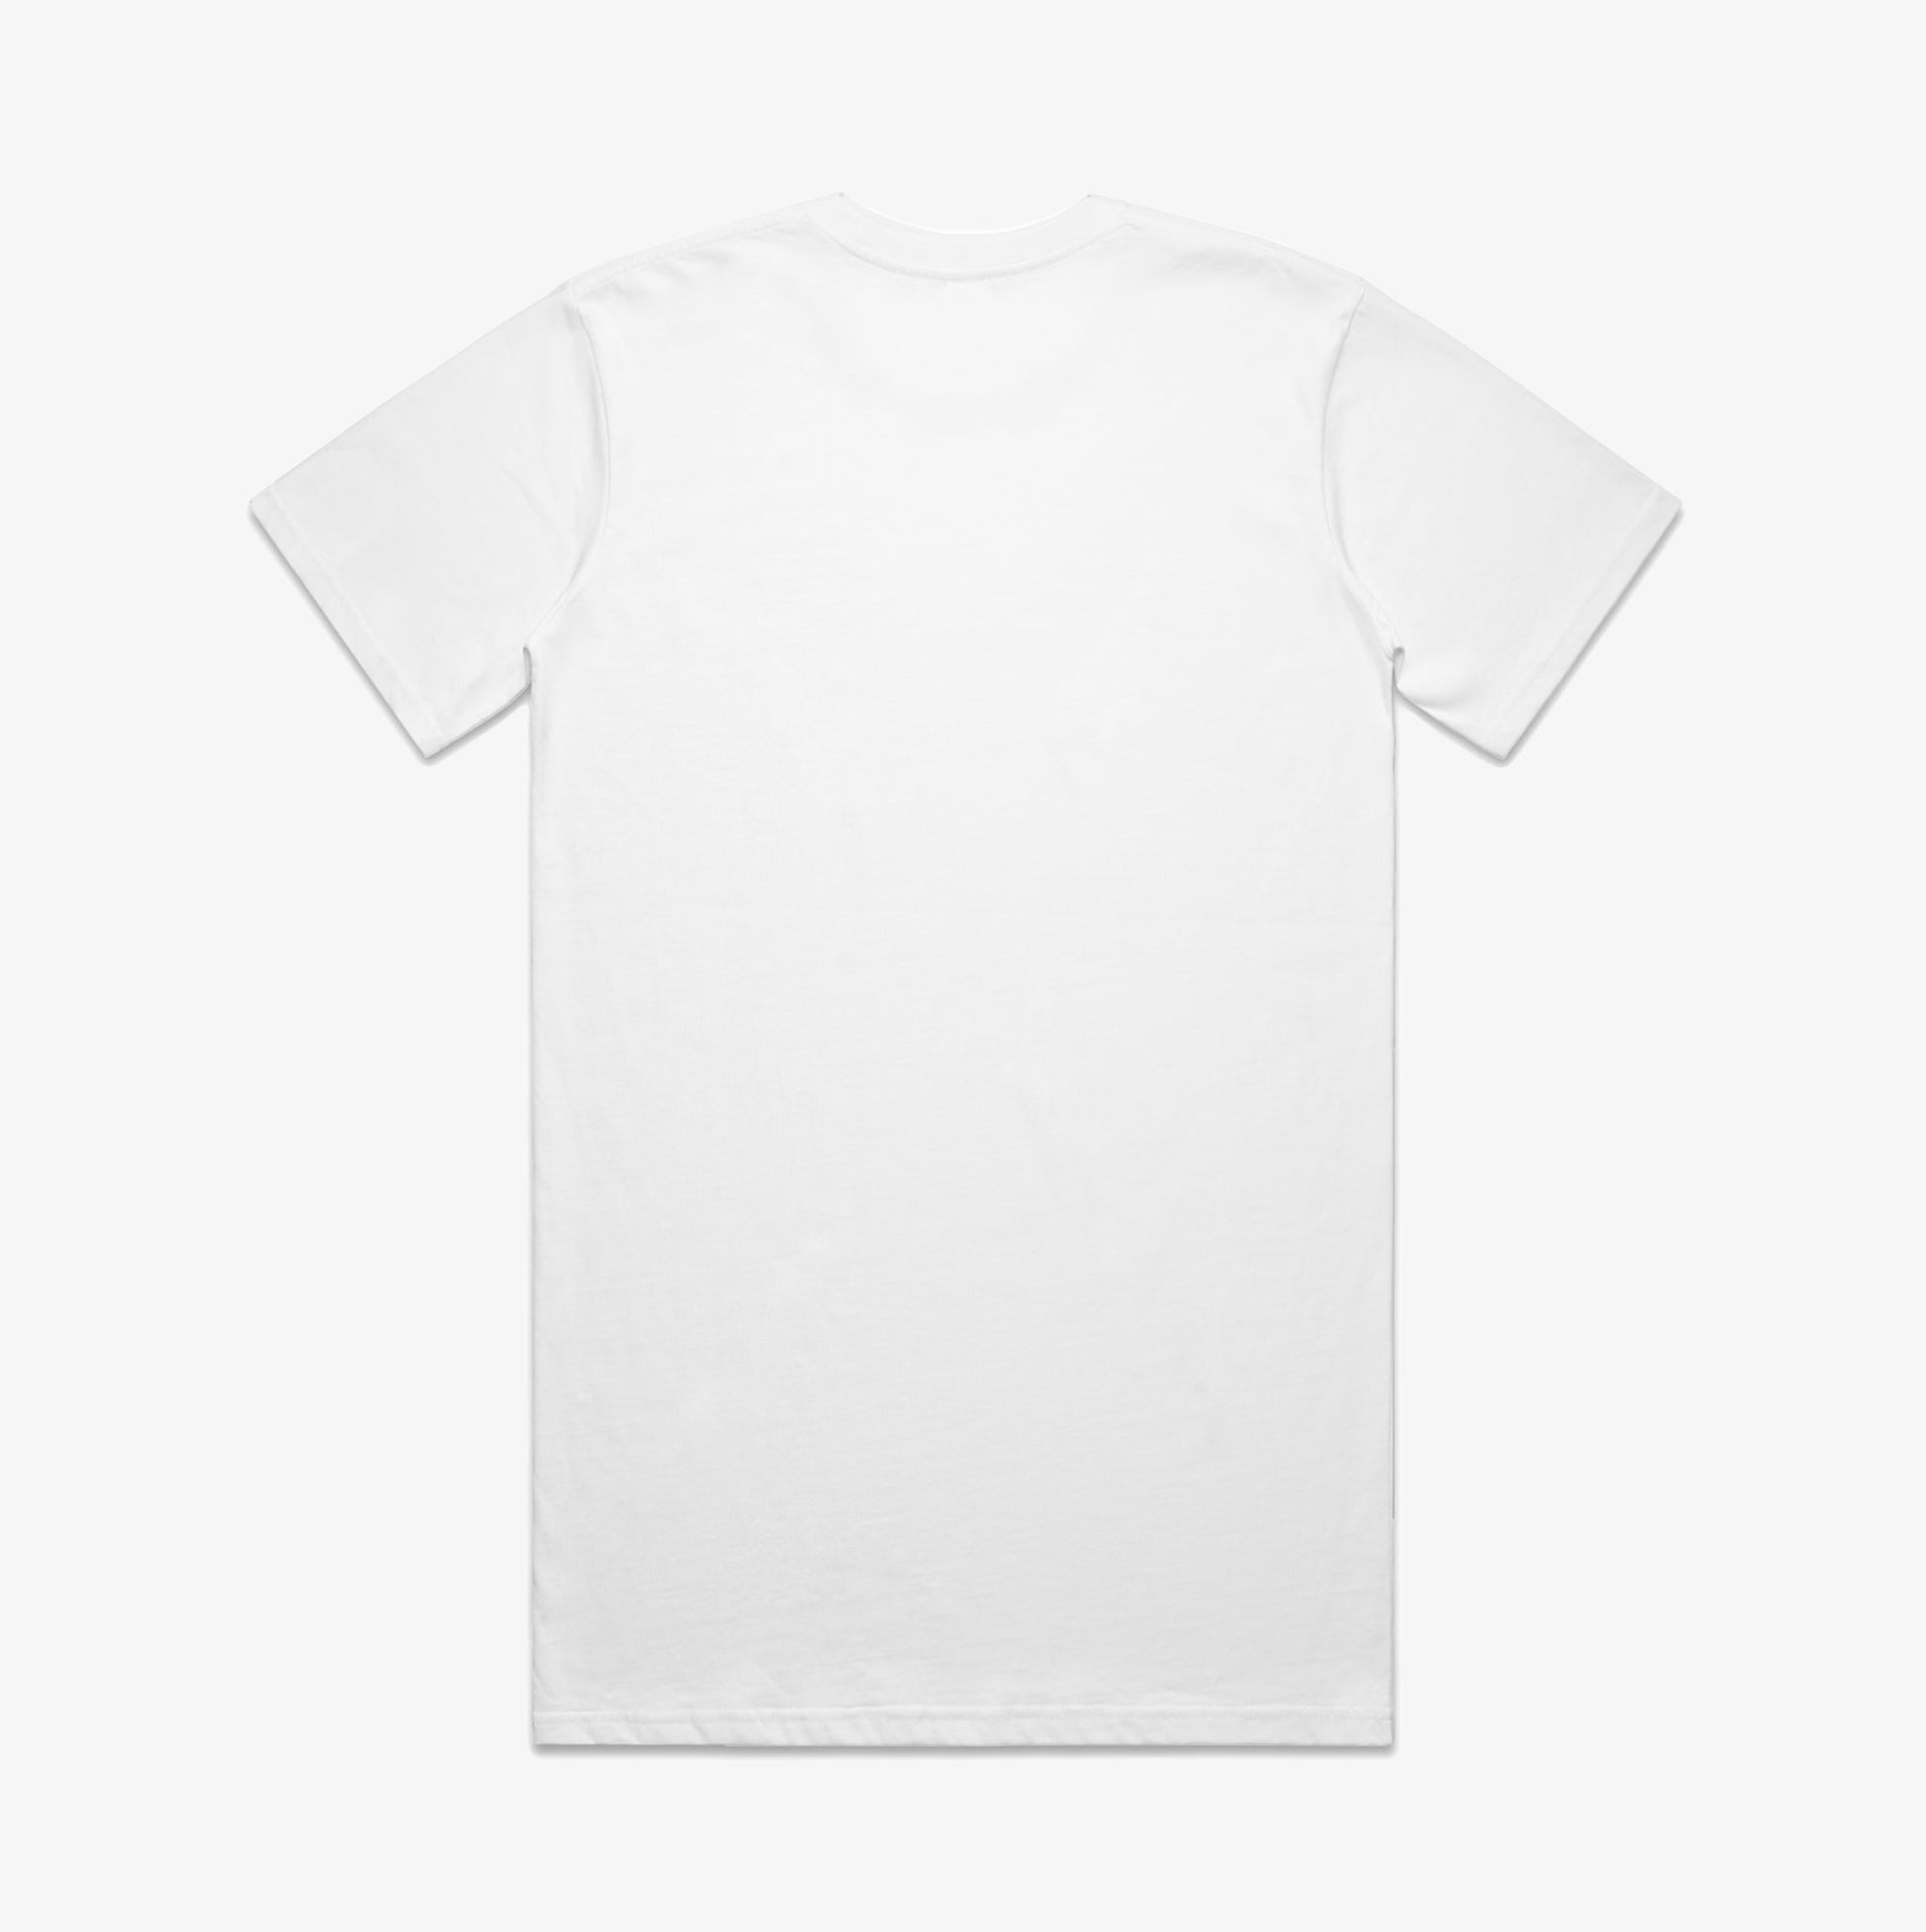 Stamos Bien's new premium, 100% cotton, unisex , white heavy t-shirt.